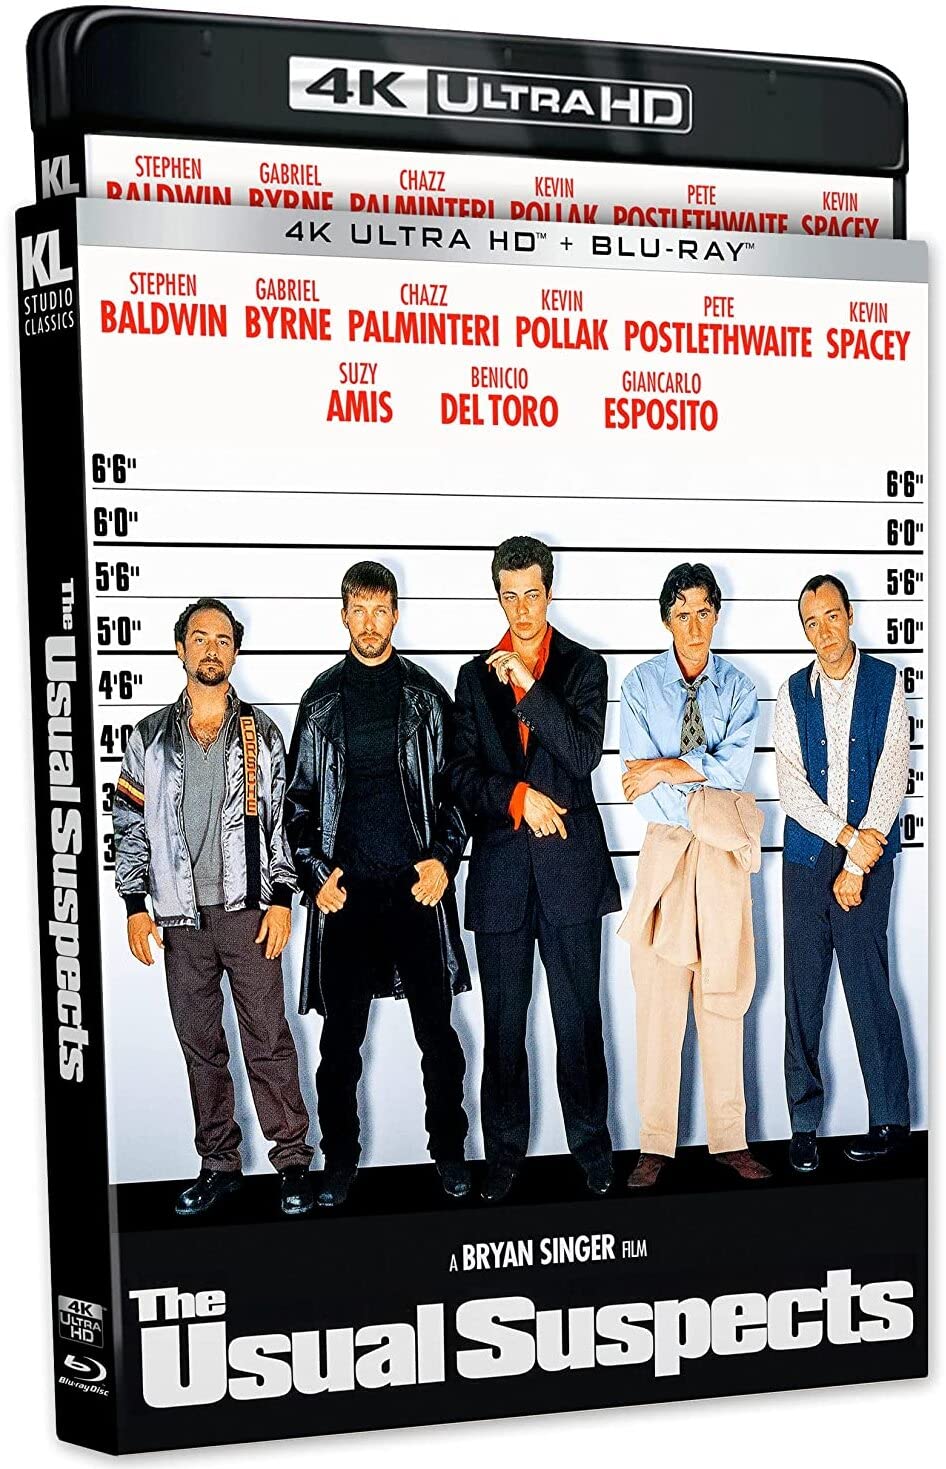 The Usual Suspects Kino Lorber 4K UHD/Blu-Ray [NEW] [SLIPCOVER]